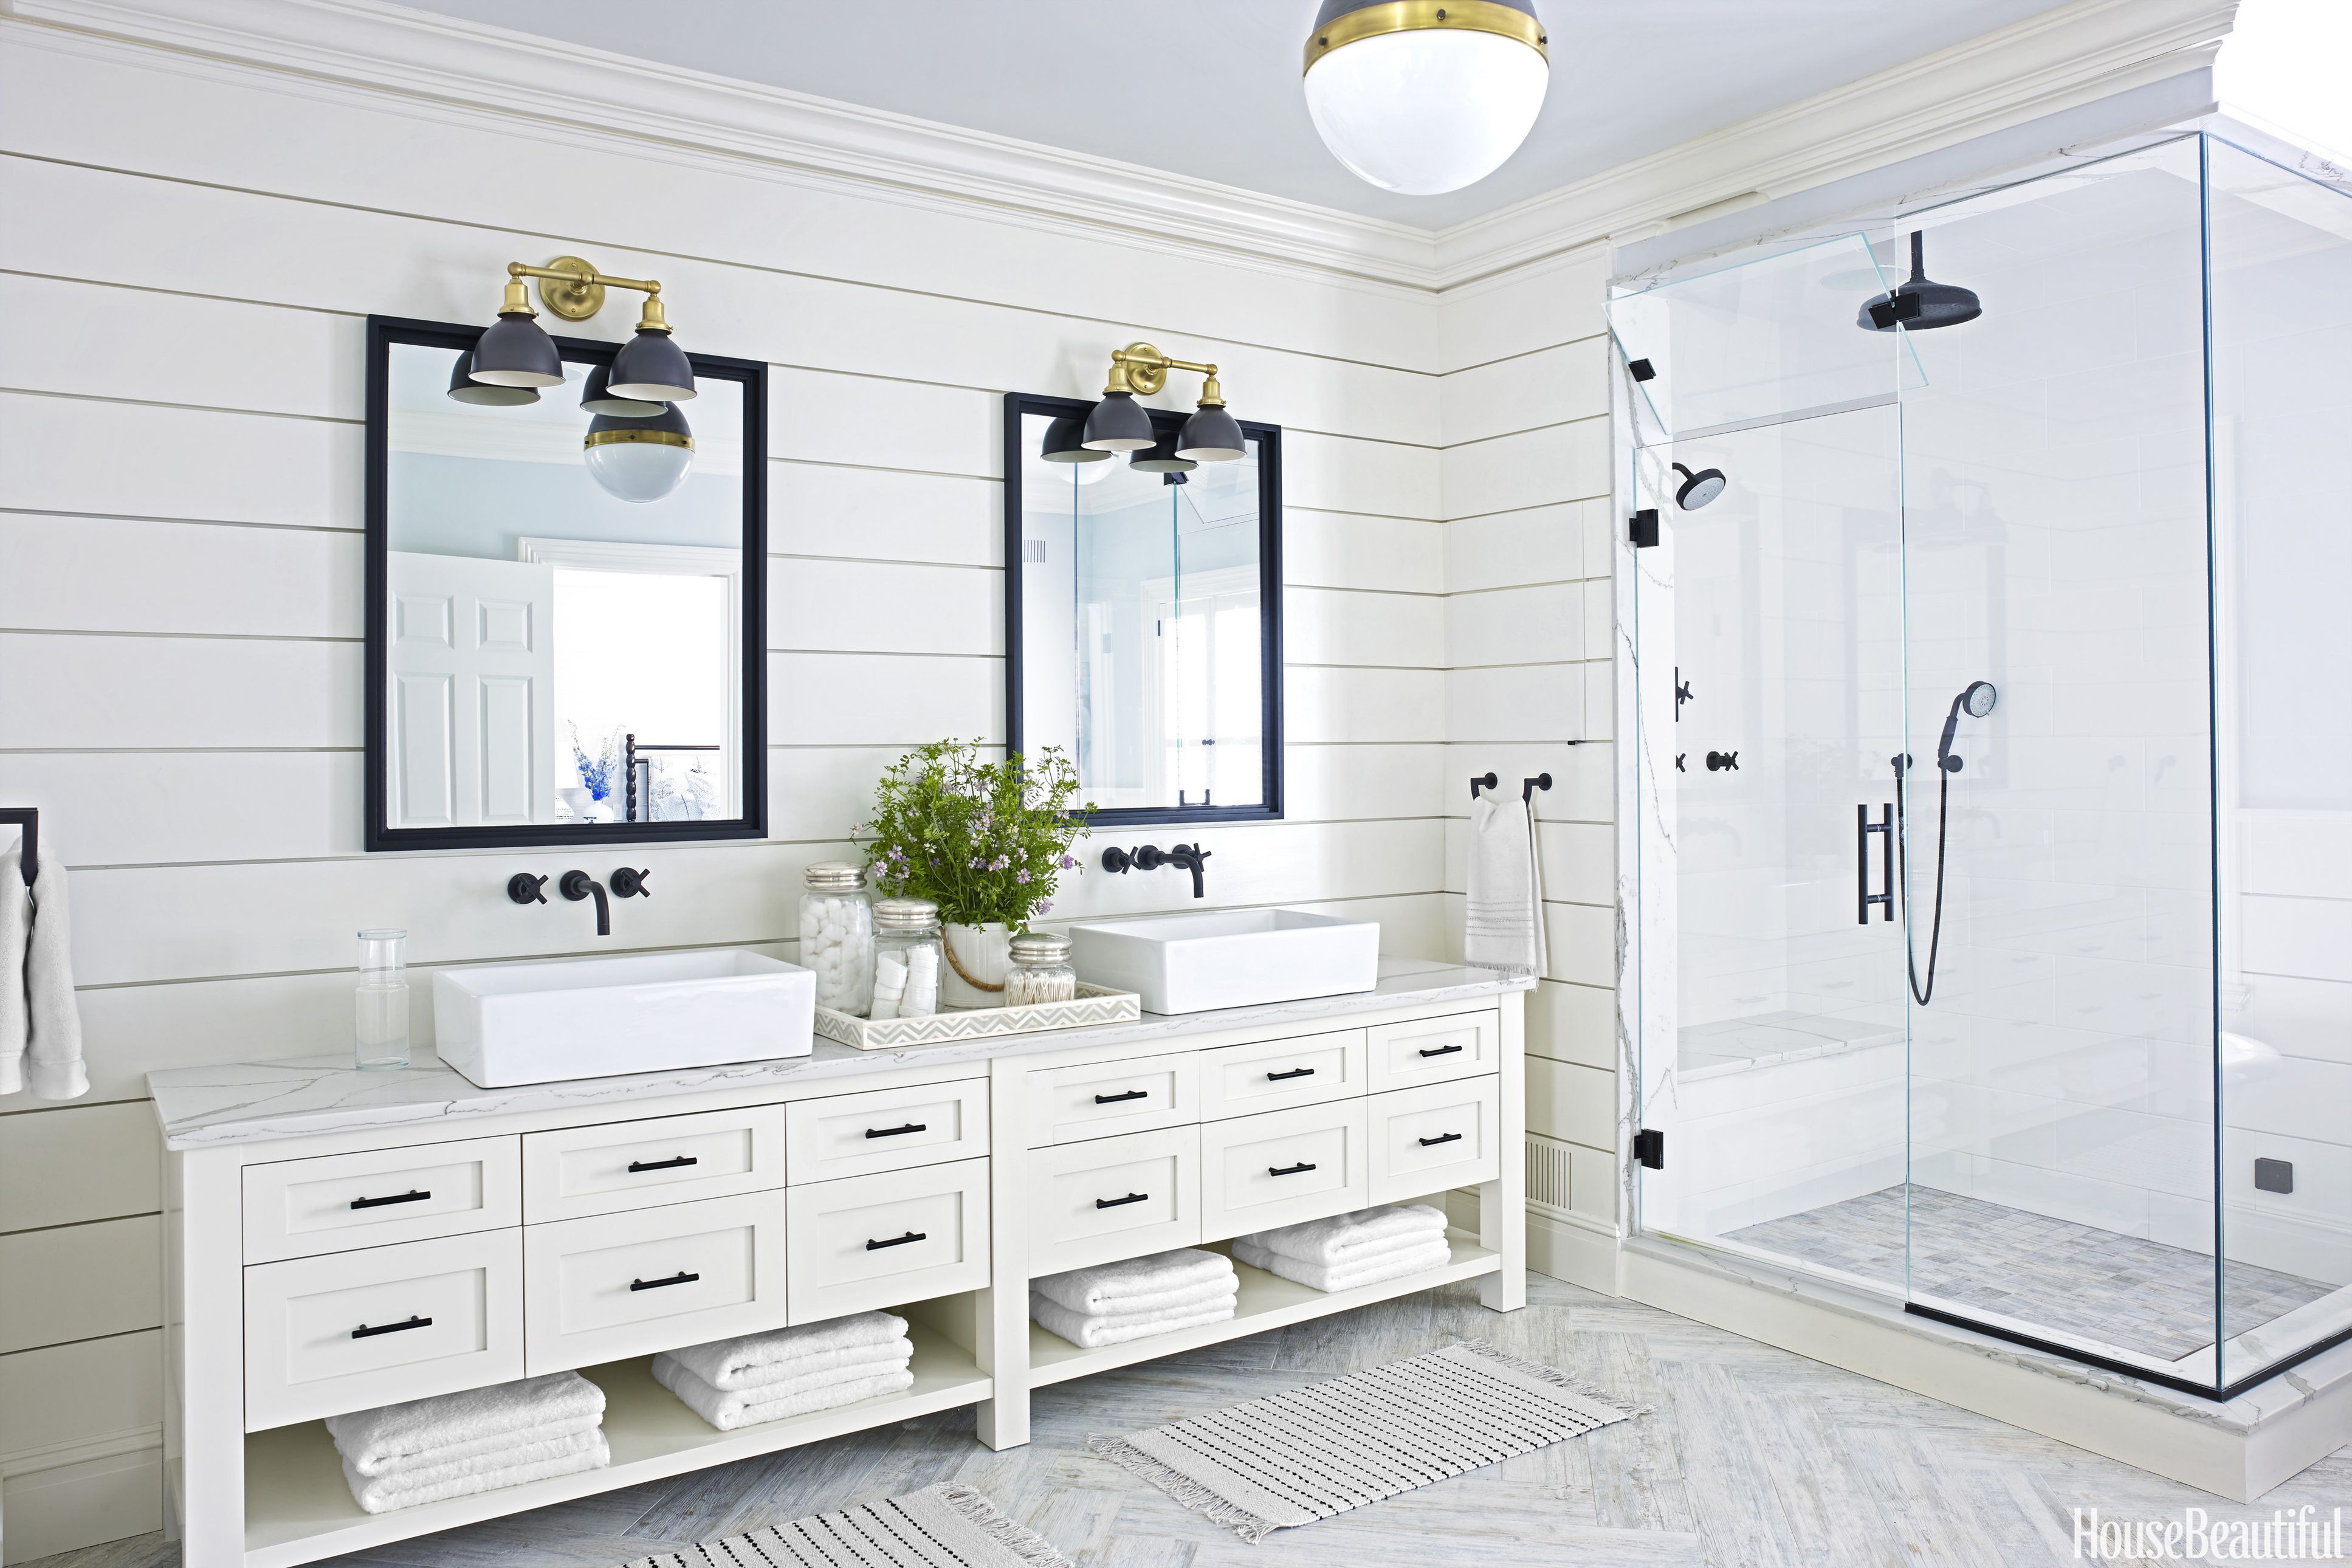 15 Black And White Bathroom Ideas Tile Designs We Love - Bathroom With White Vanity Ideas